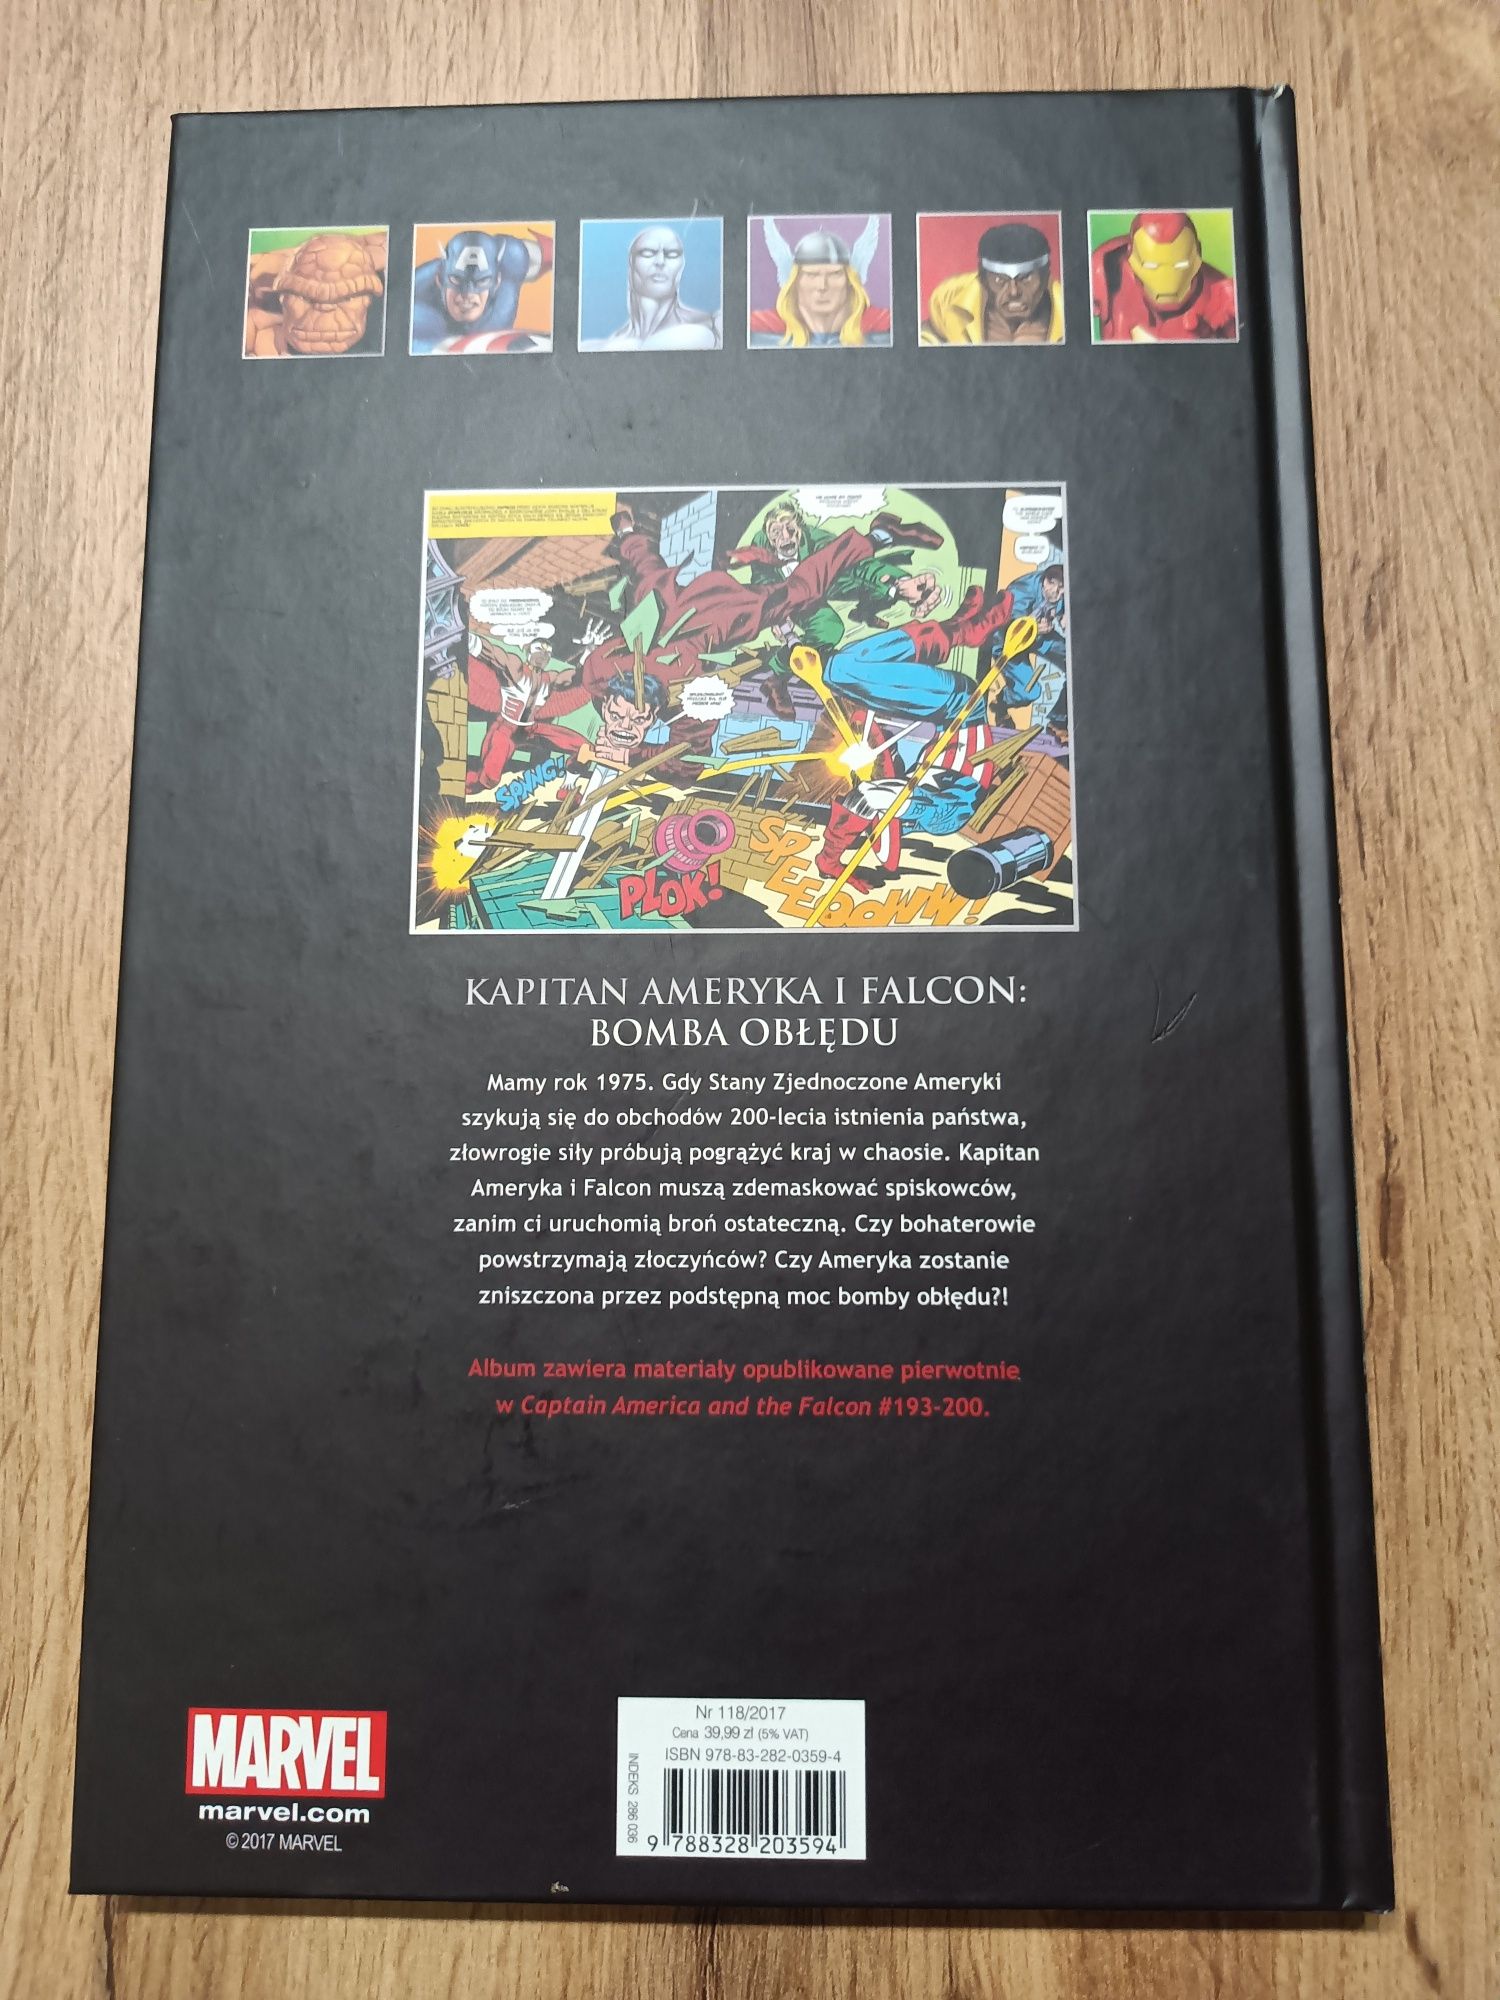 WKKM Kolekcja Marvela 118 Kapitan Ameryka i Falcon